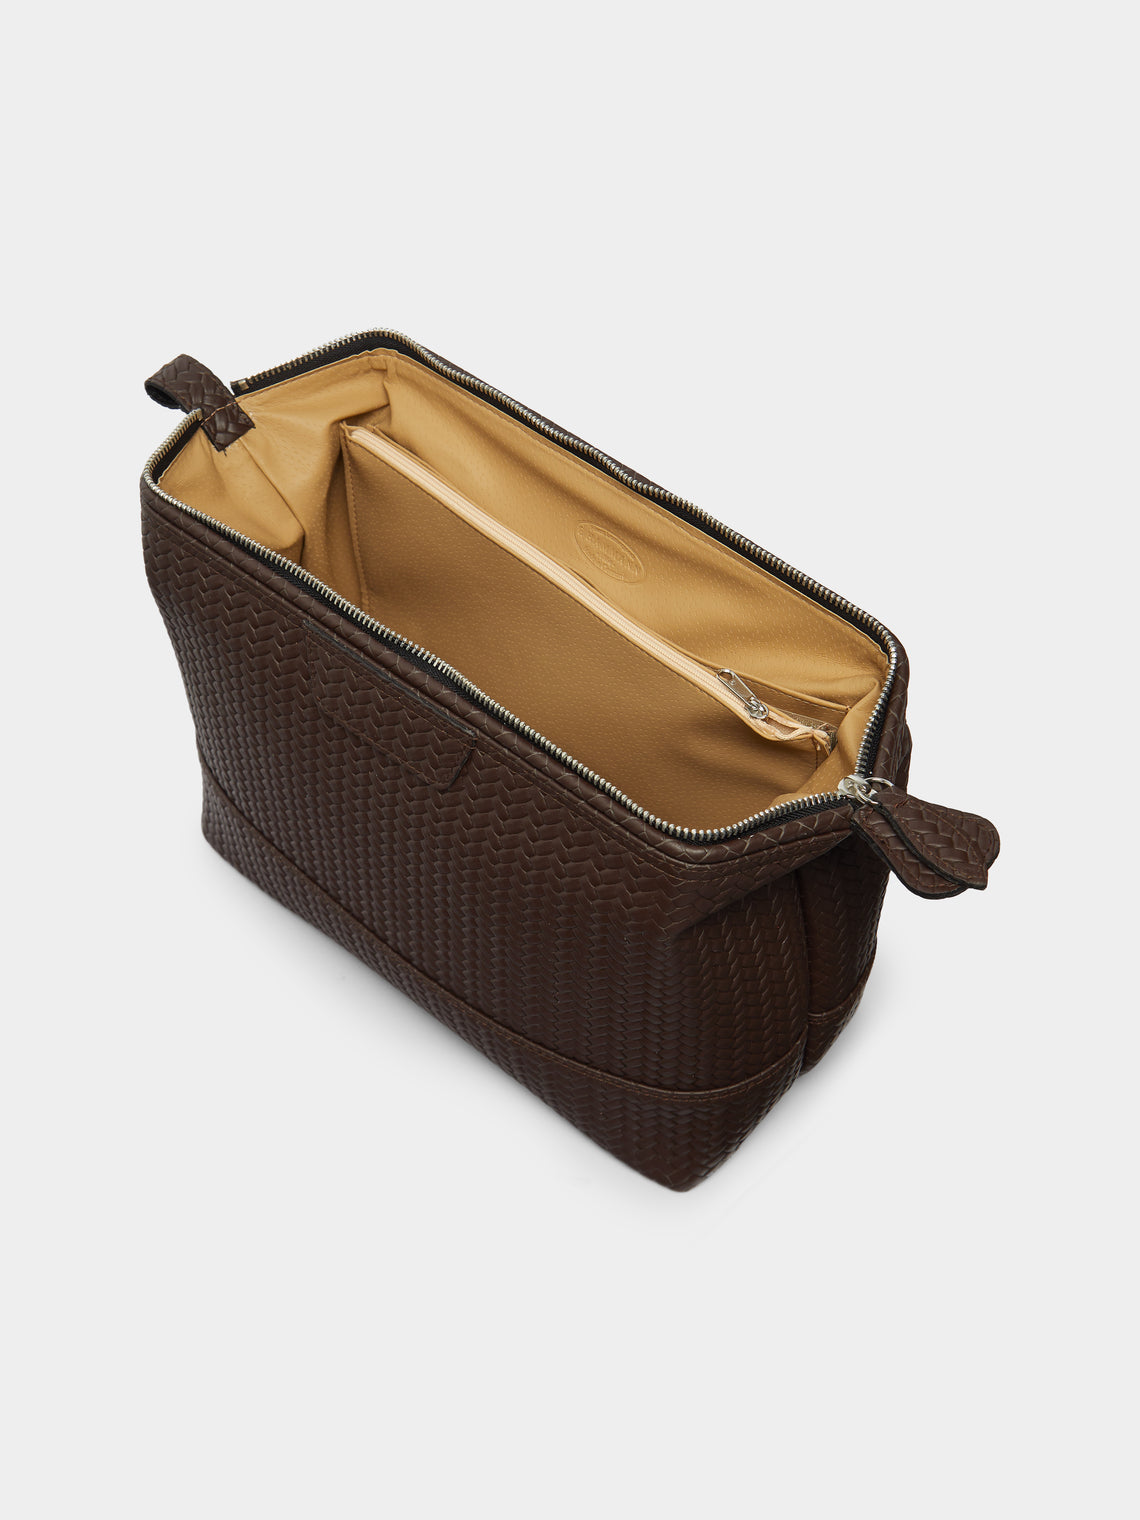 F. Hammann - Leather Large Wash Bag -  - ABASK